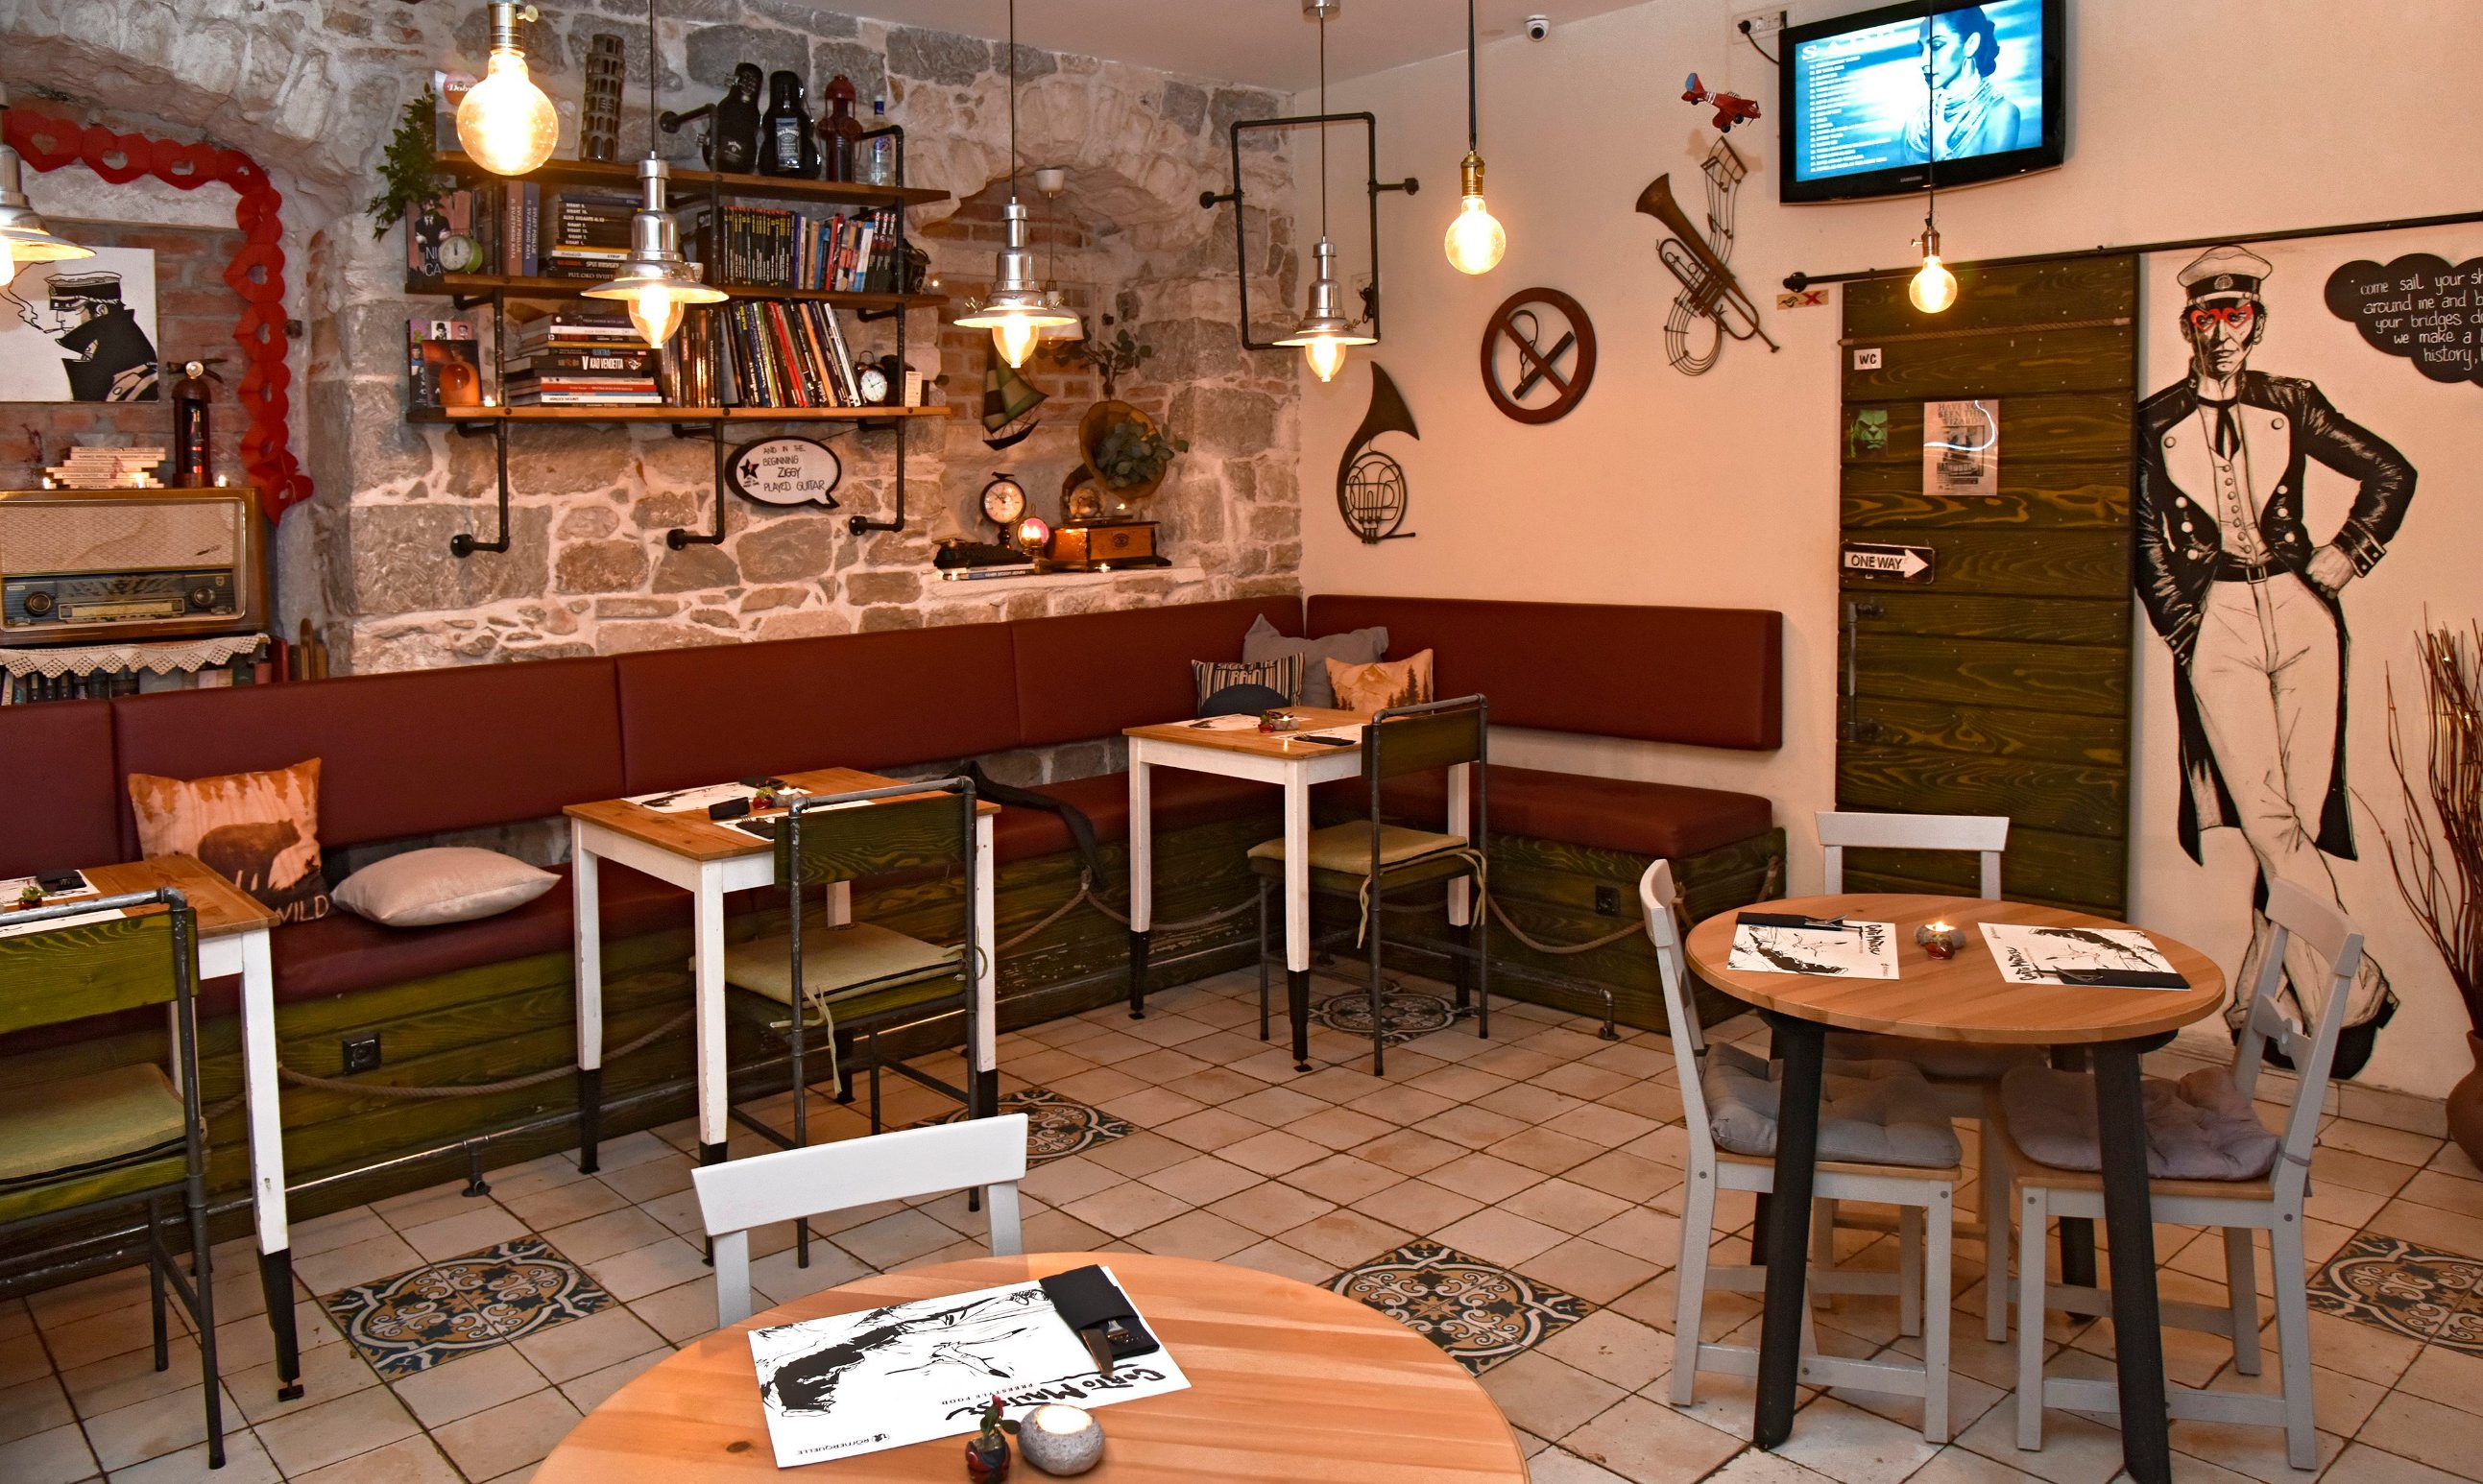 Split,250520
Restaurant Corto Maltese na Obrovu.
Na fotografiji: Interijer restorana.
Foto: Josko Supic / CROPIX